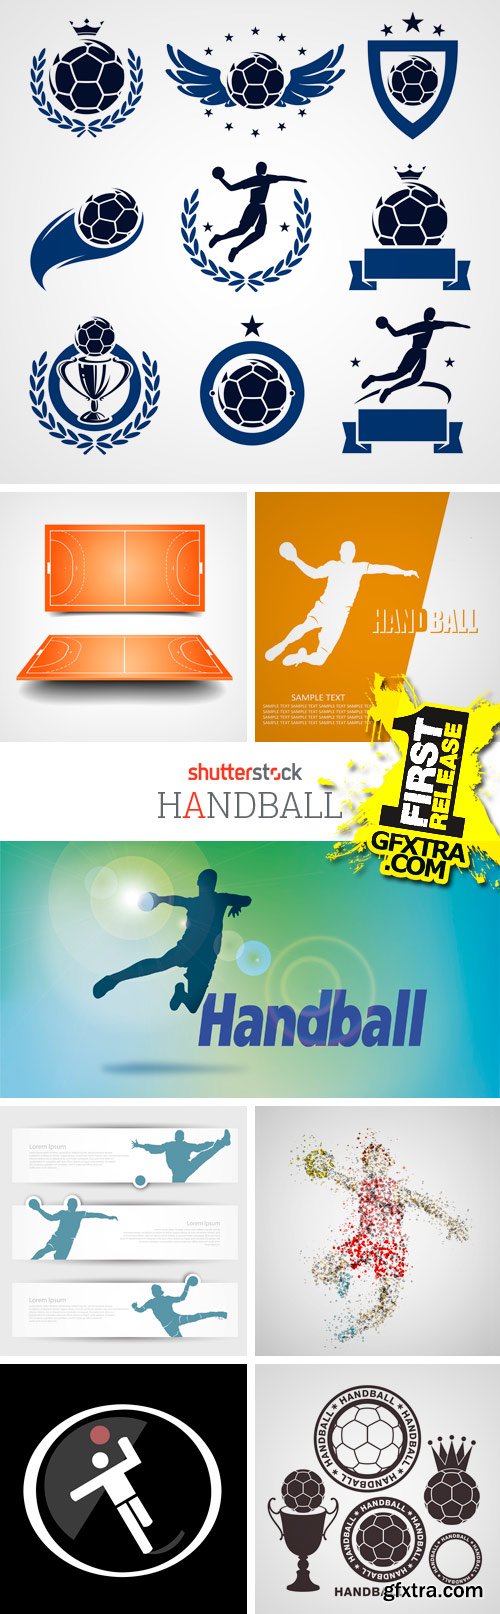 Amazing SS - Handball, 25xEPS